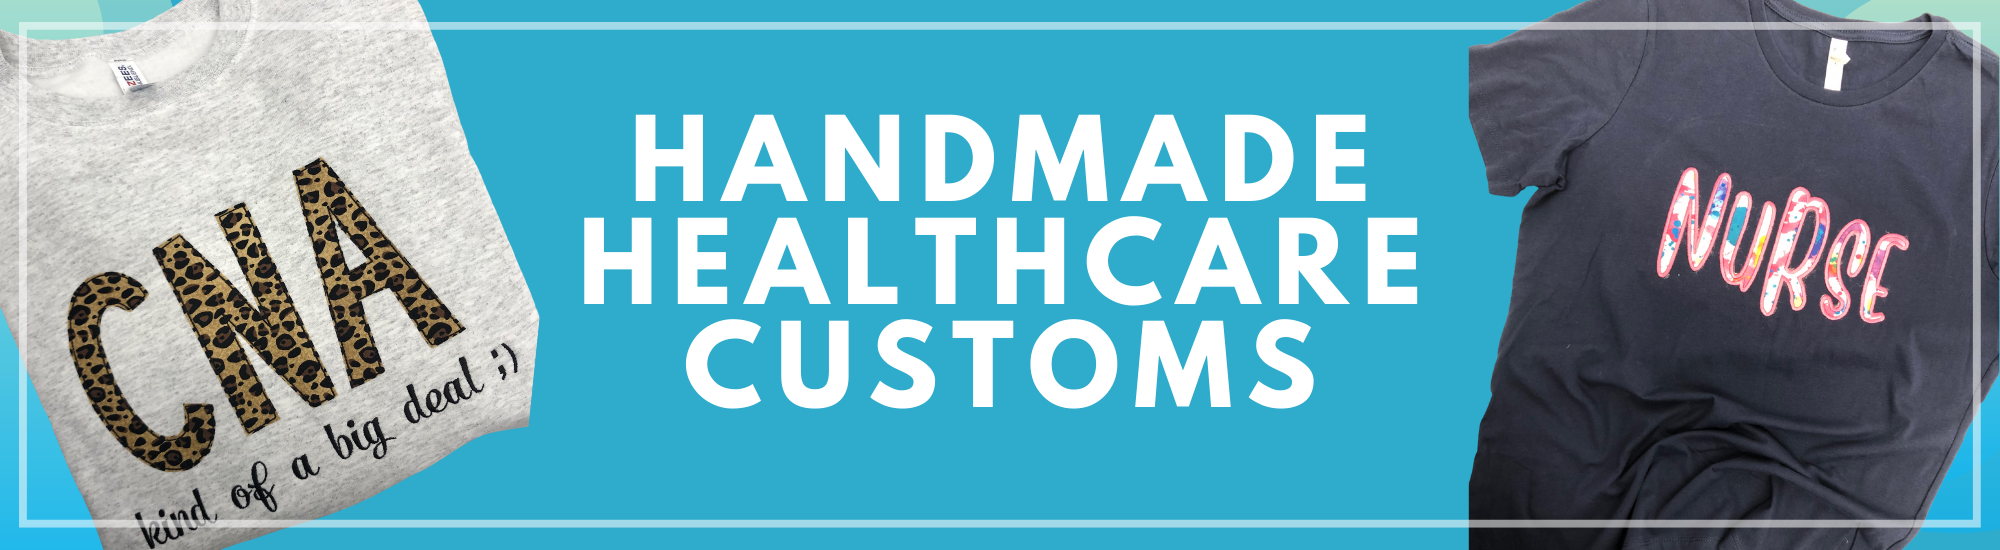 Handmade Healthcare Customs